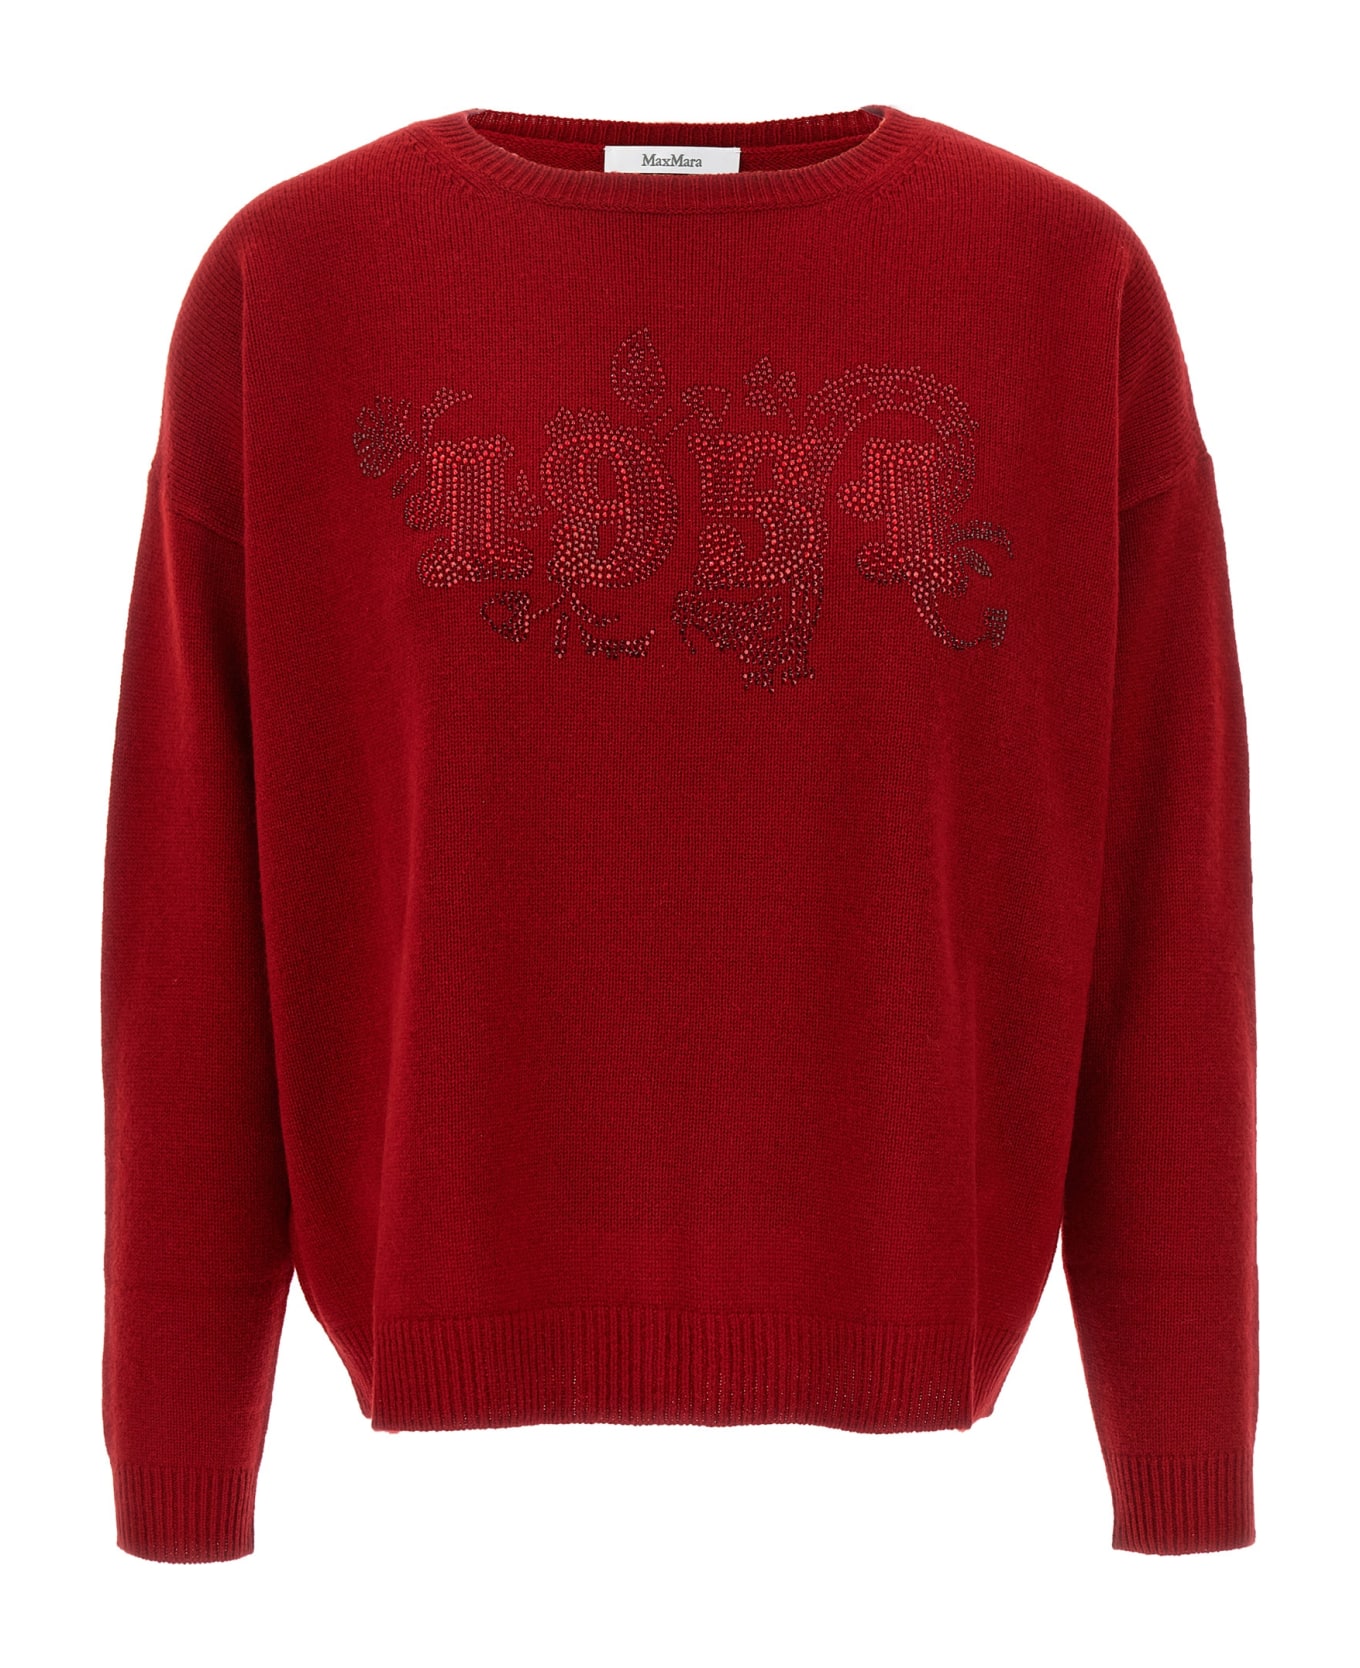 Max Mara 'nias' Sweater - Red ニットウェア